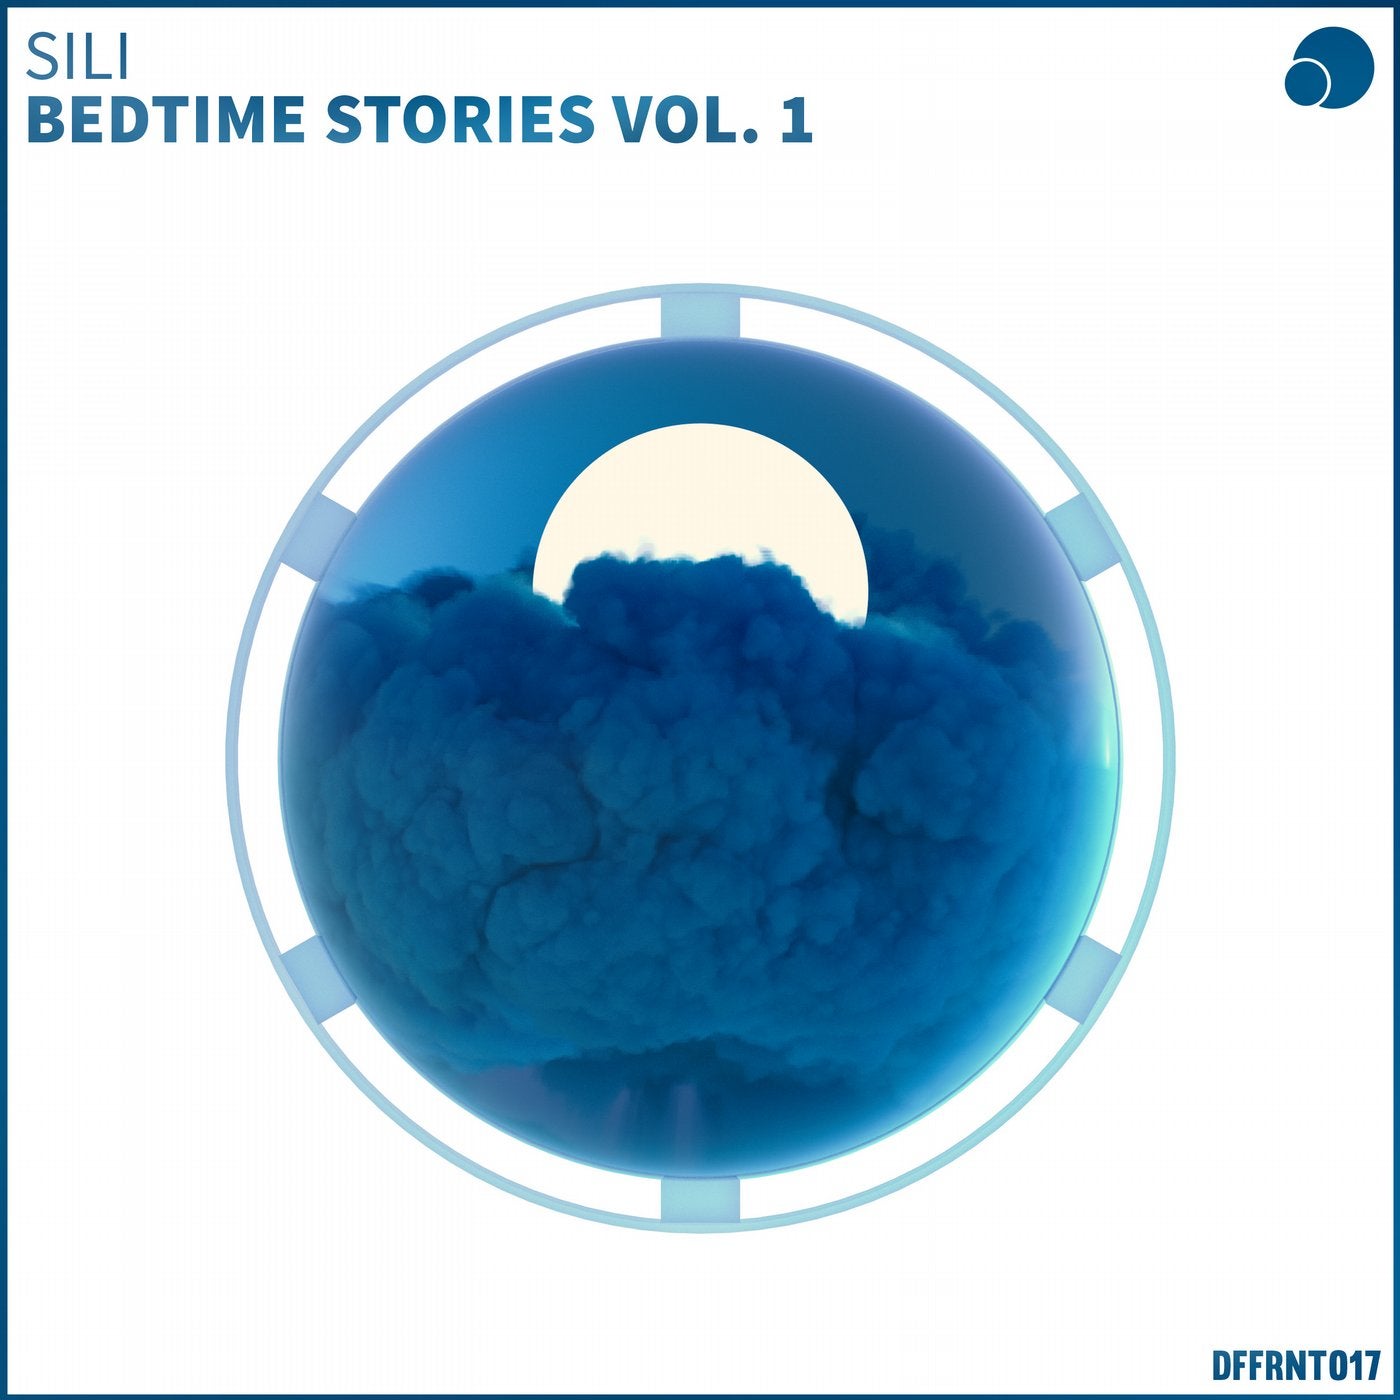 Bedtime Stories Vol. 1